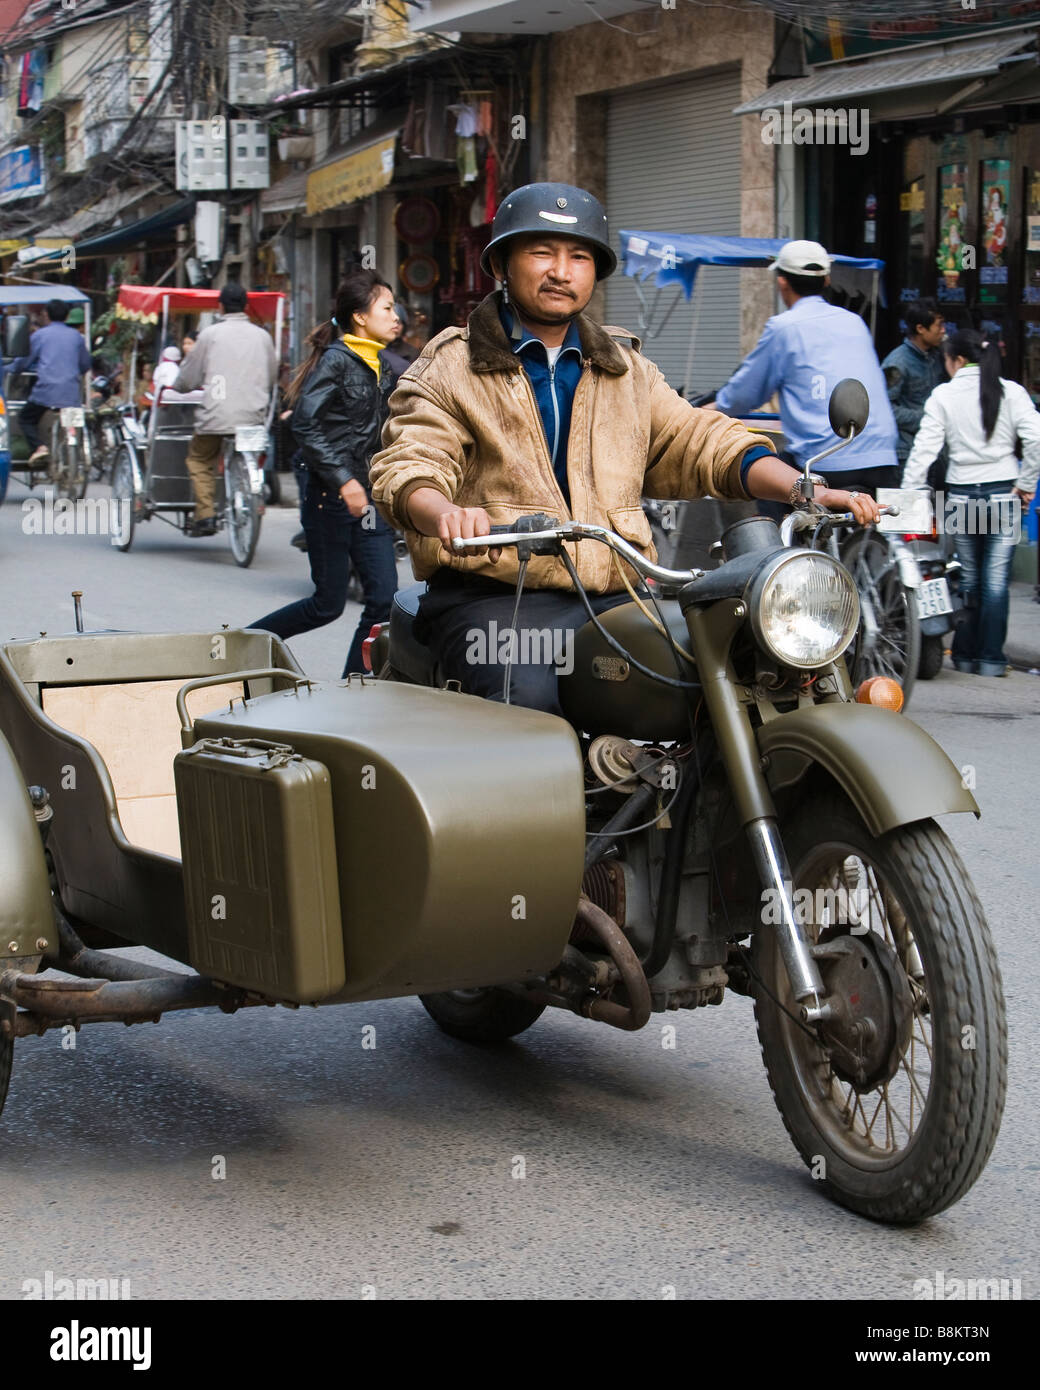 Mann mit Zinn Helm am Motorrad Stockfoto